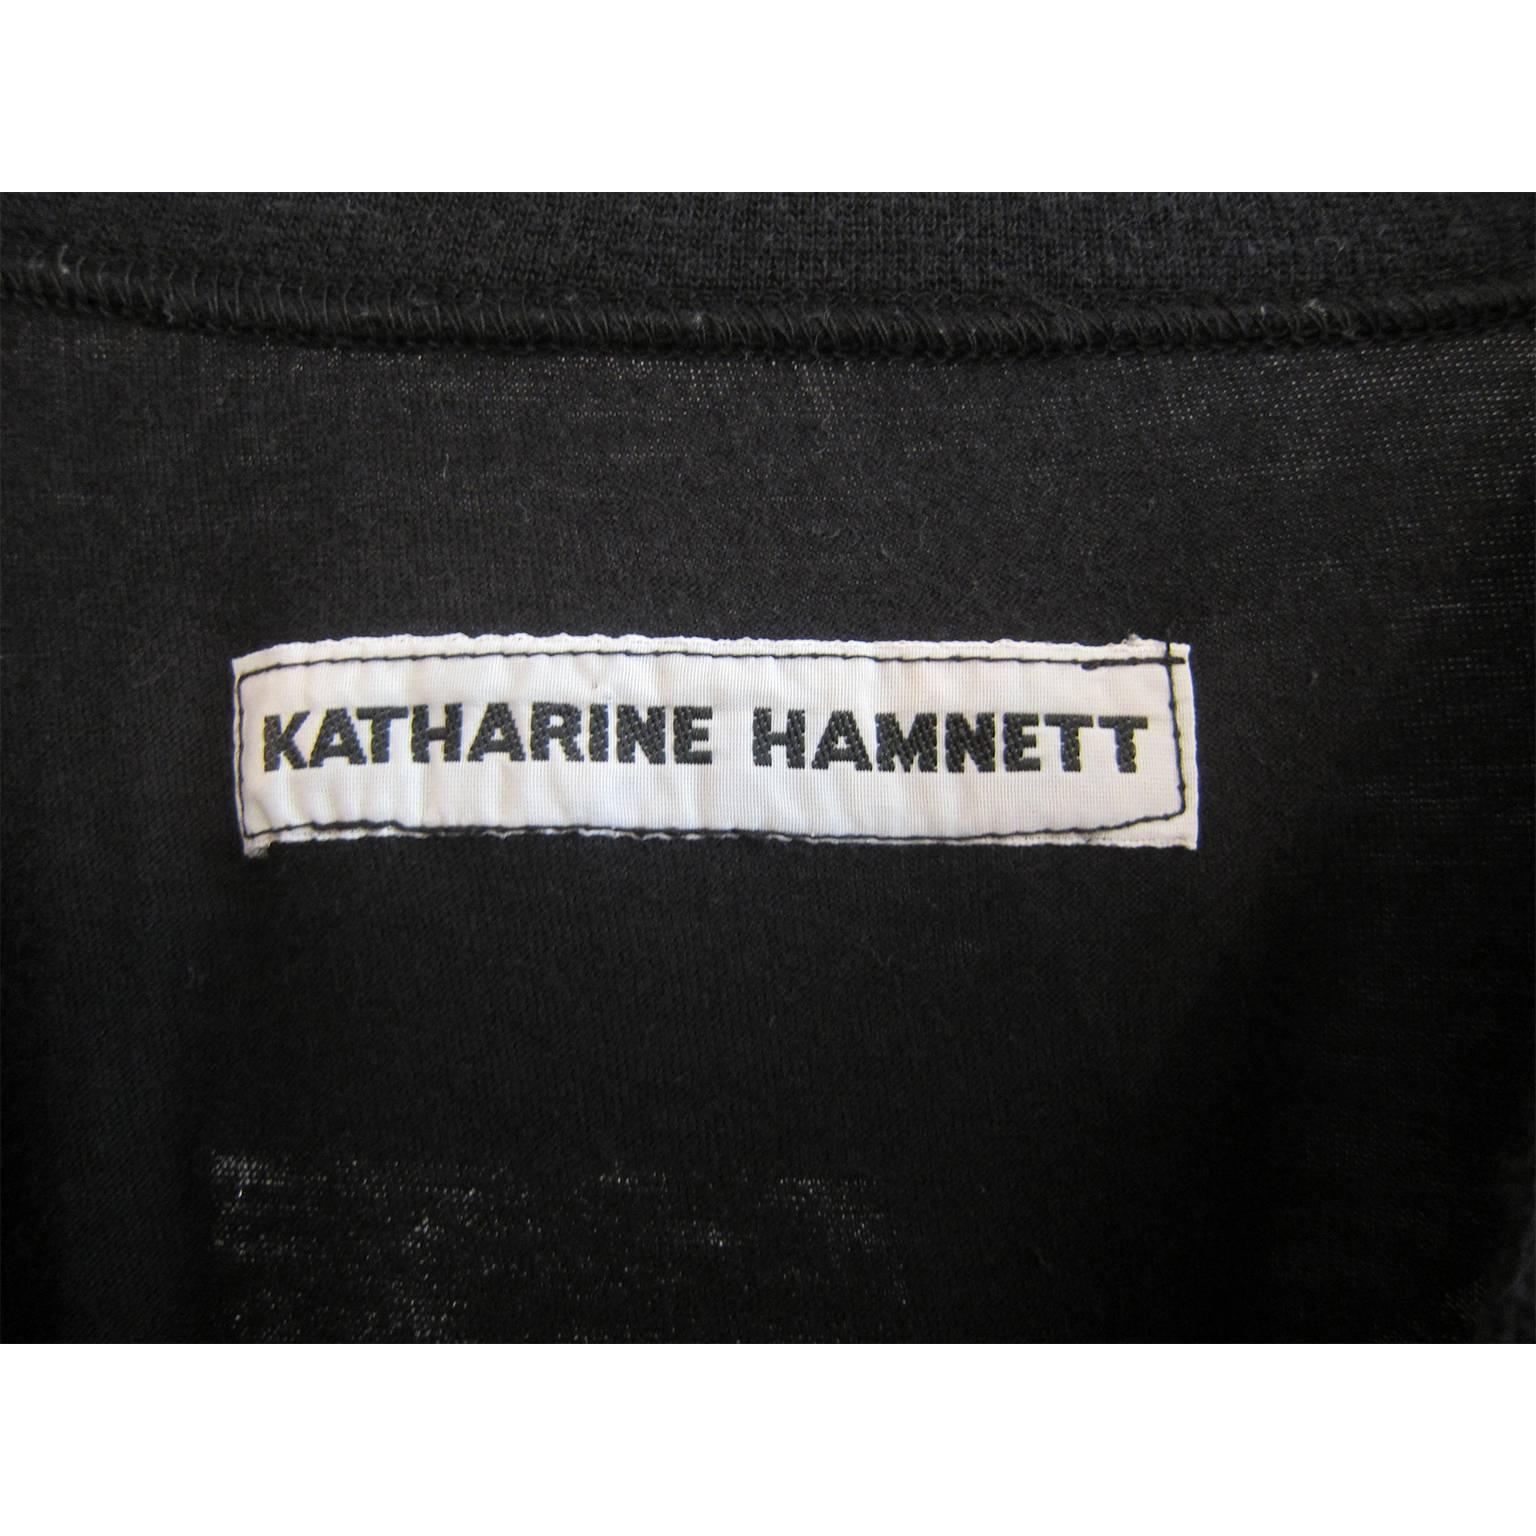 Black Katharine Hamnett Ban Pollution Slogan Tshirt